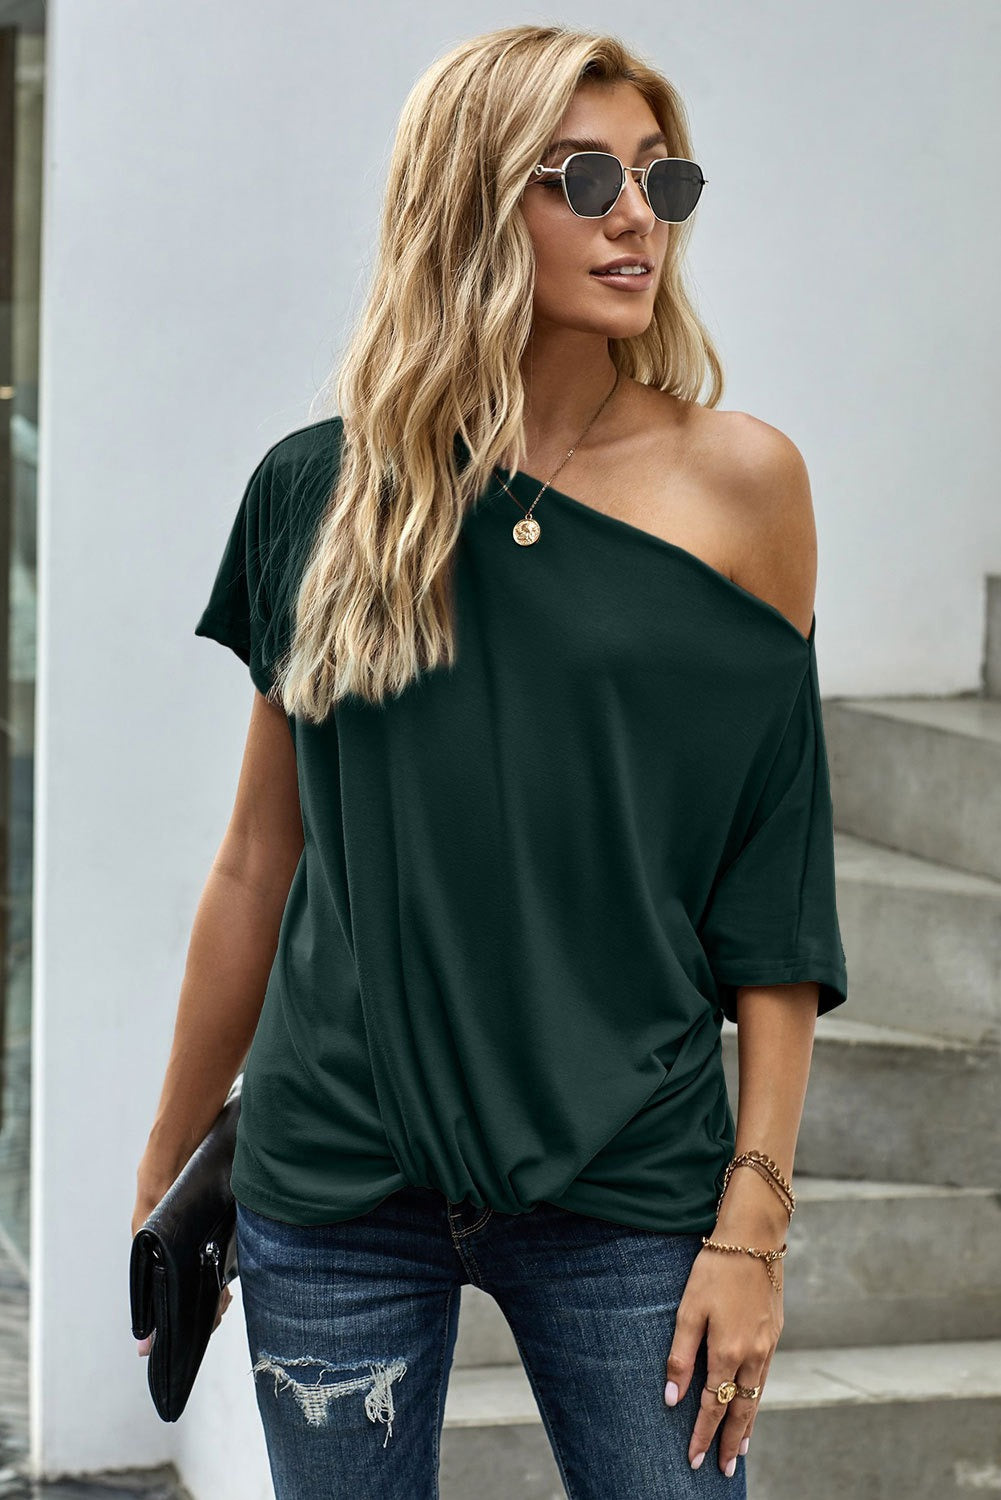 T-shirt Femme Vert Decontracte Epaules Denudees Manches Courtes